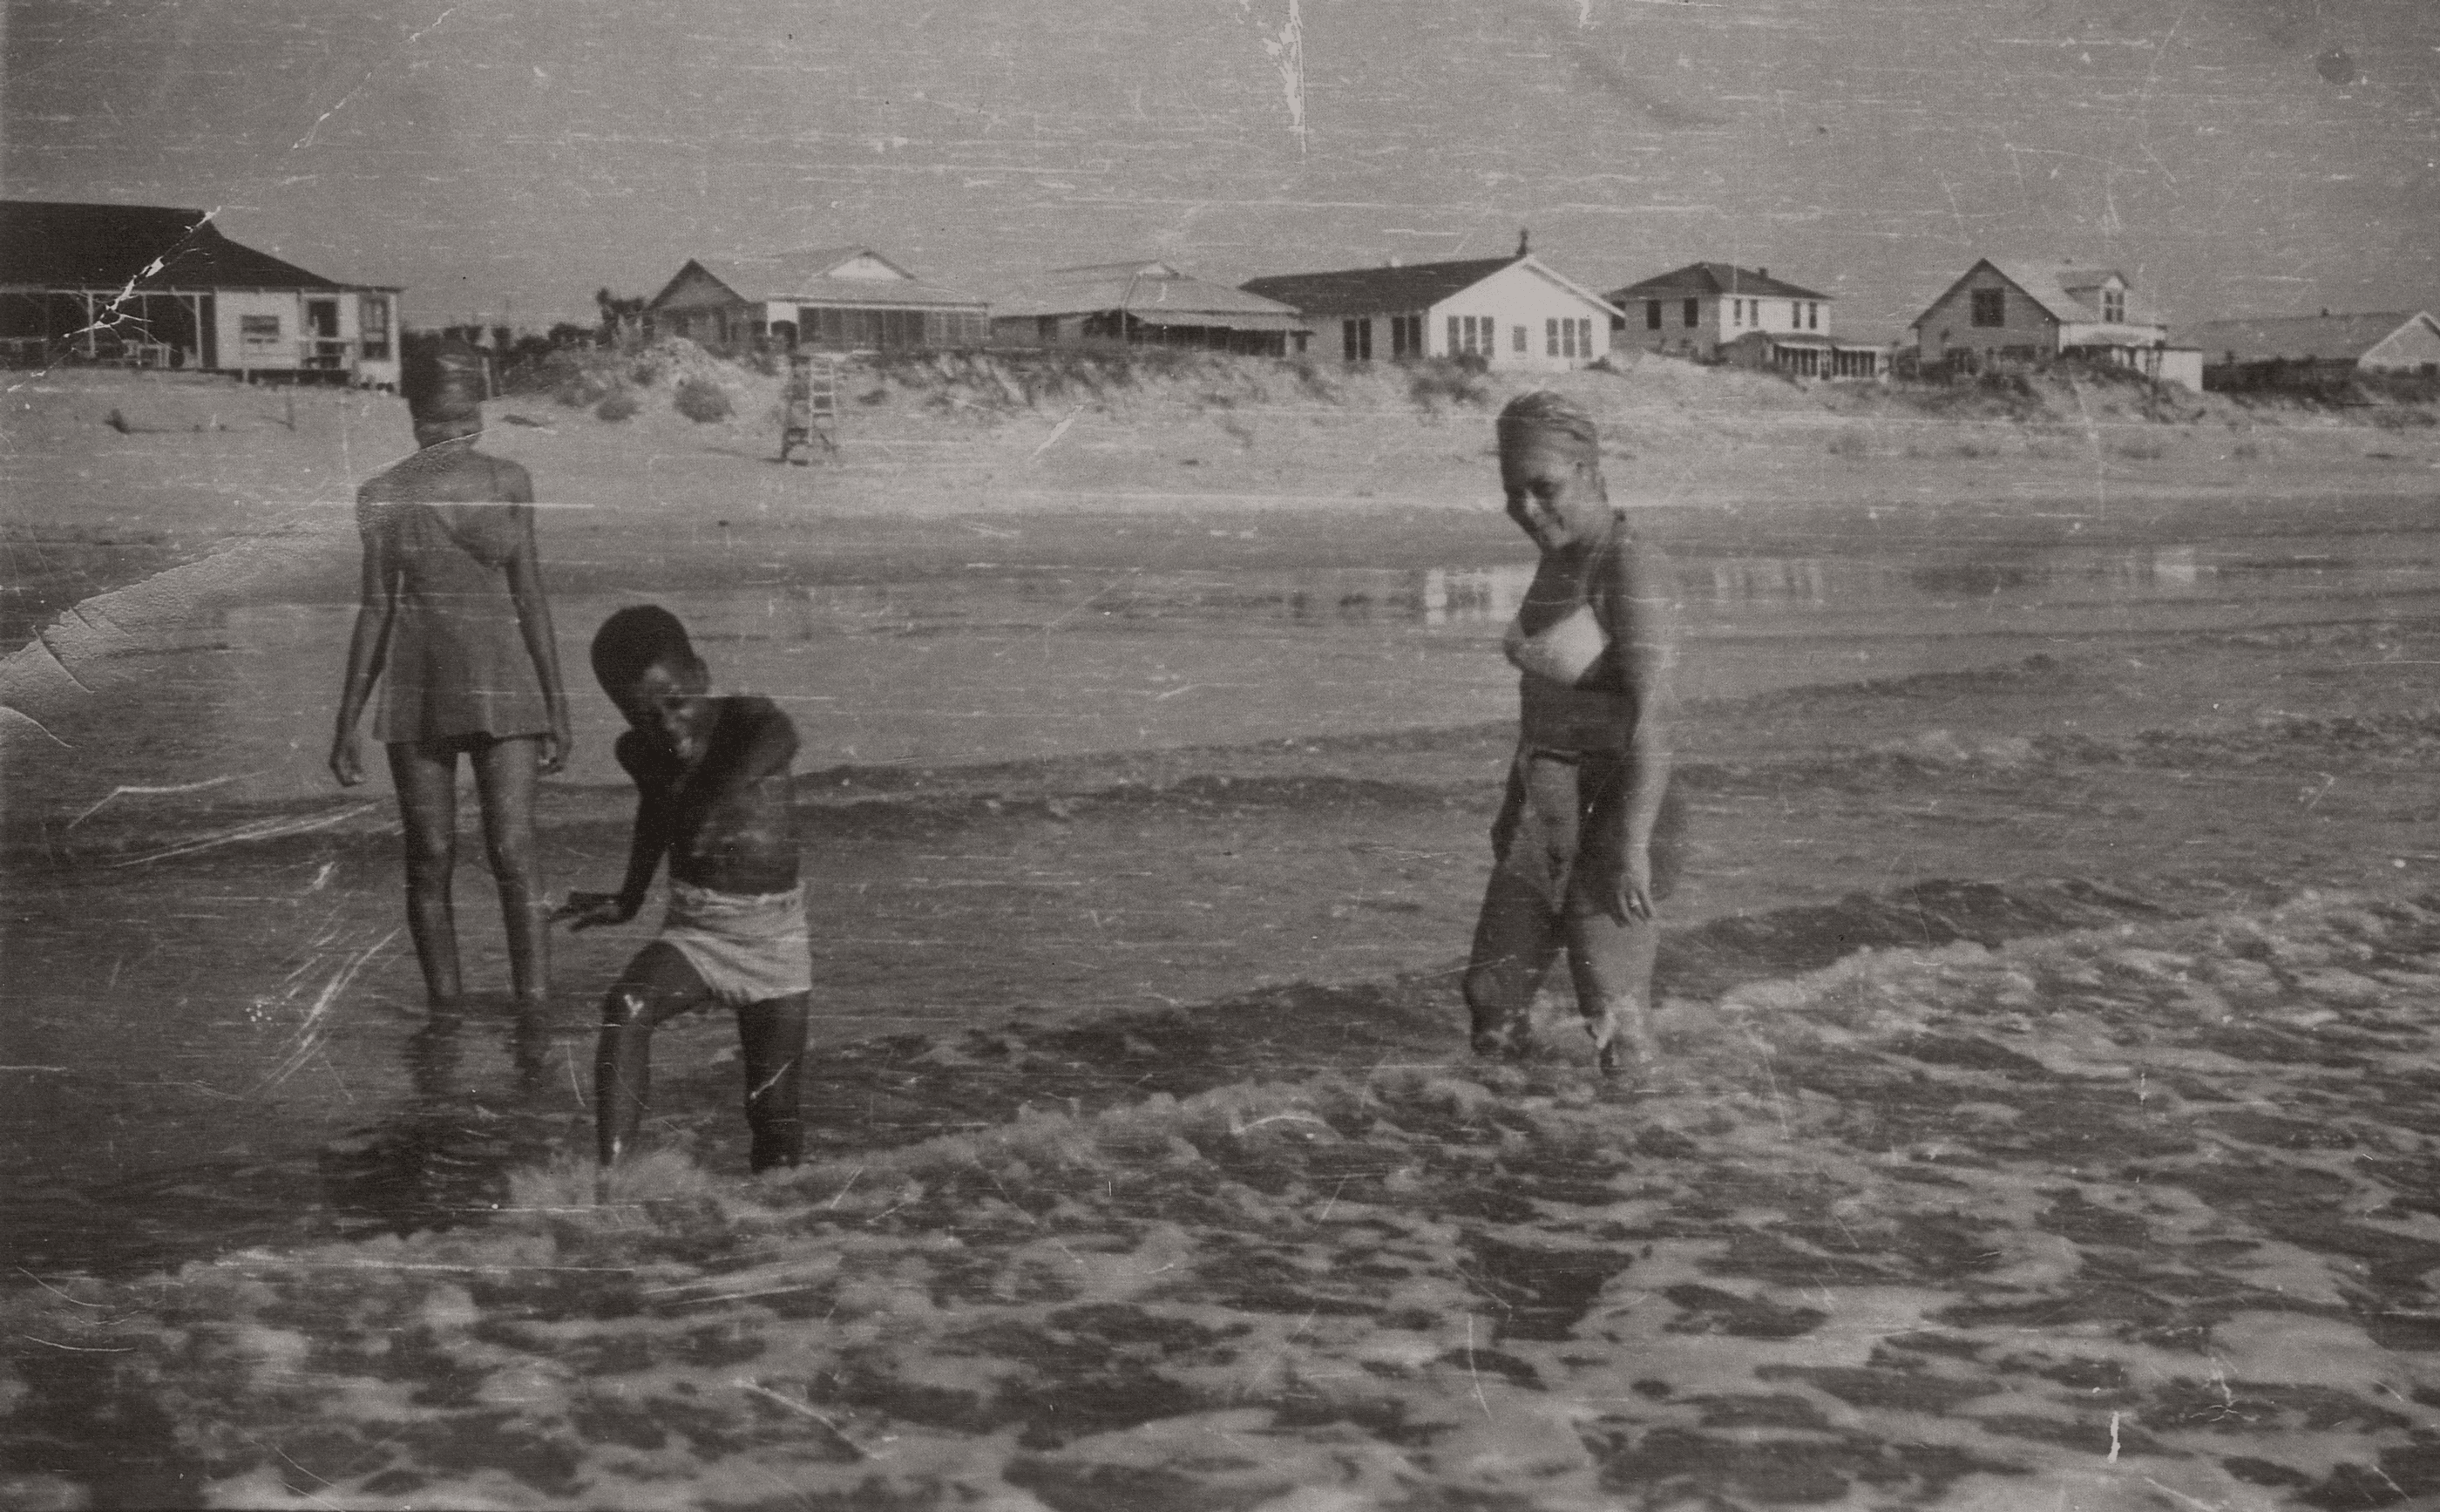 How Black Beaches Were Developed to Combat Jim Crow Segregation